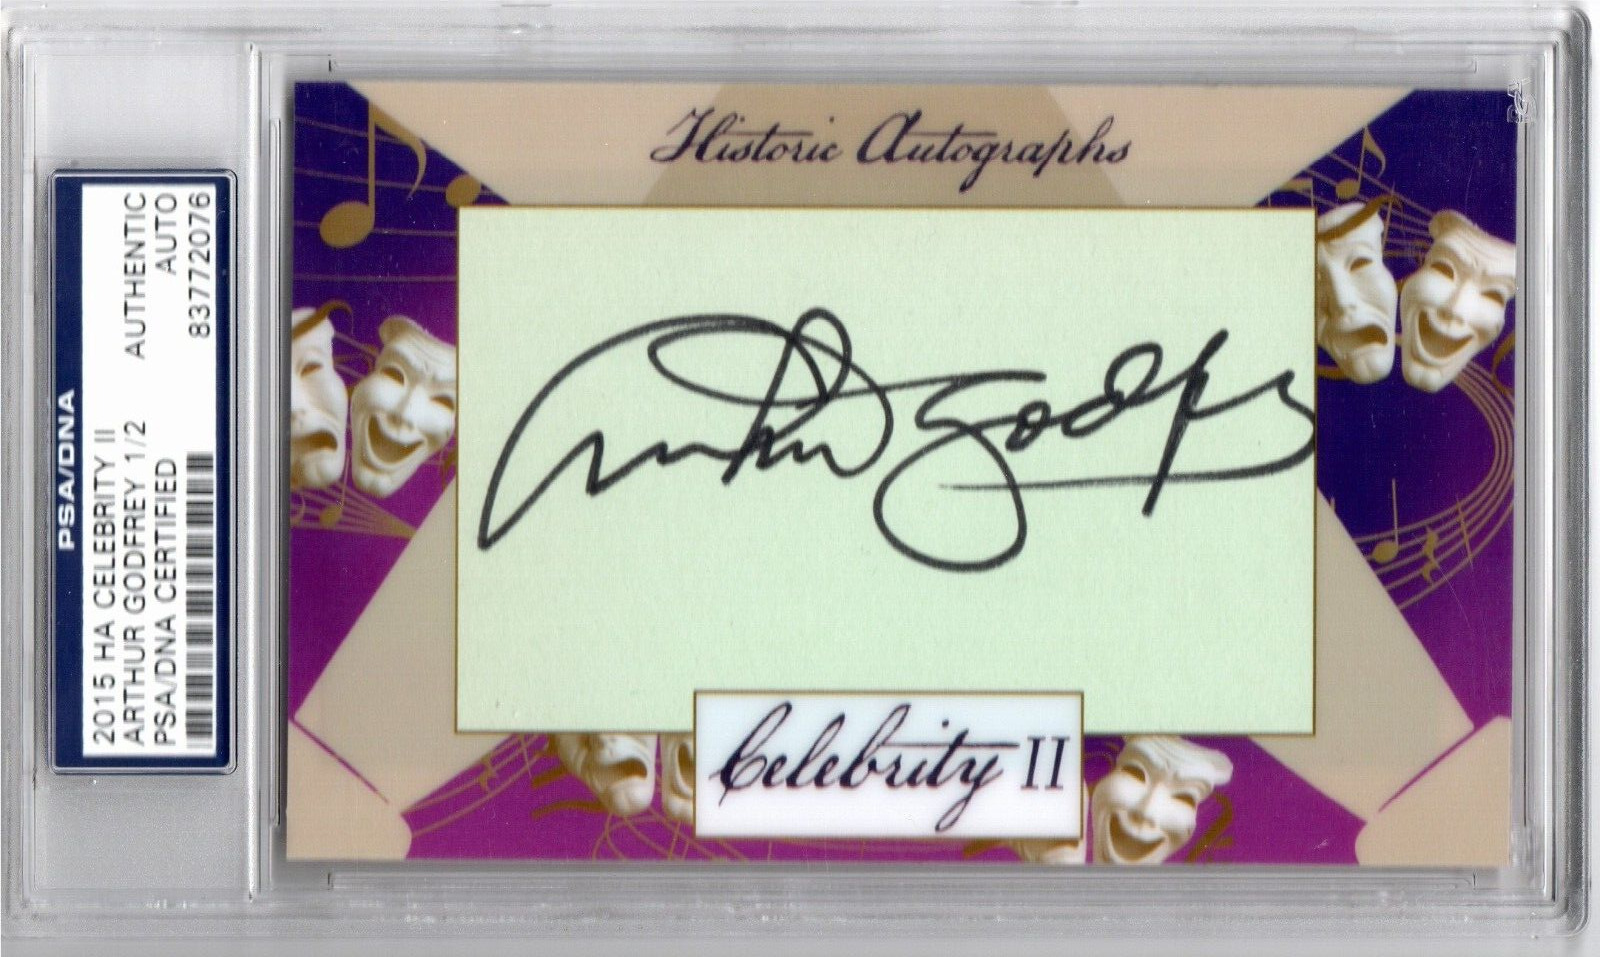 2015 PSA/DNA HA Historic Celebrity Arthur Godfrey Autograph Signature Auto 1/2